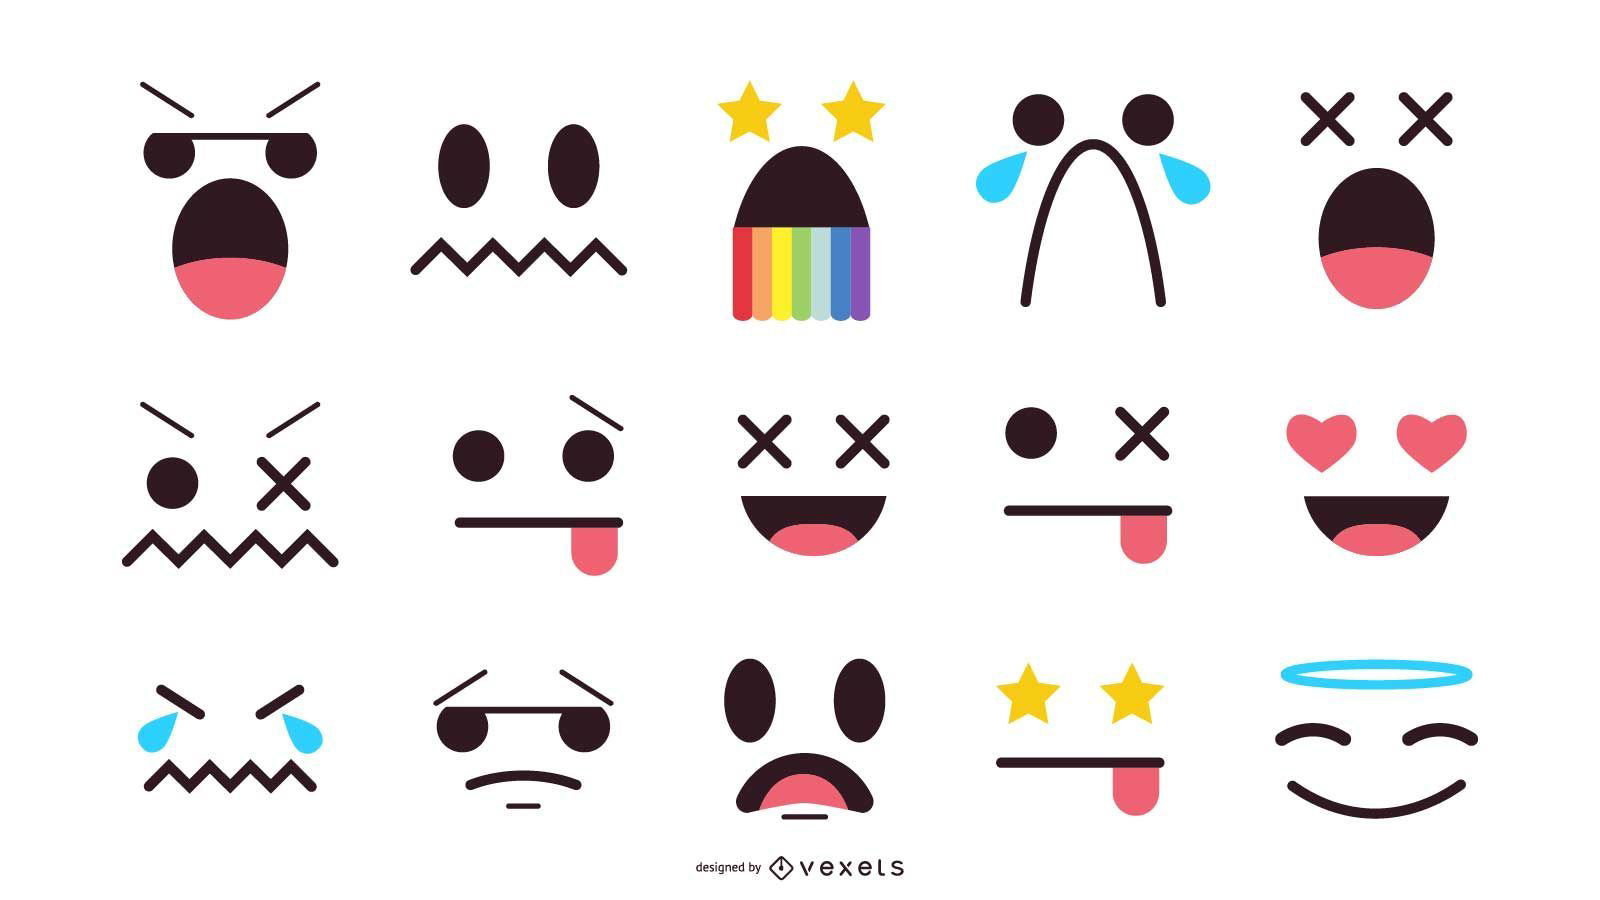 emojis rostos de desenhos animados kawaii 1236424 Vetor no Vecteezy